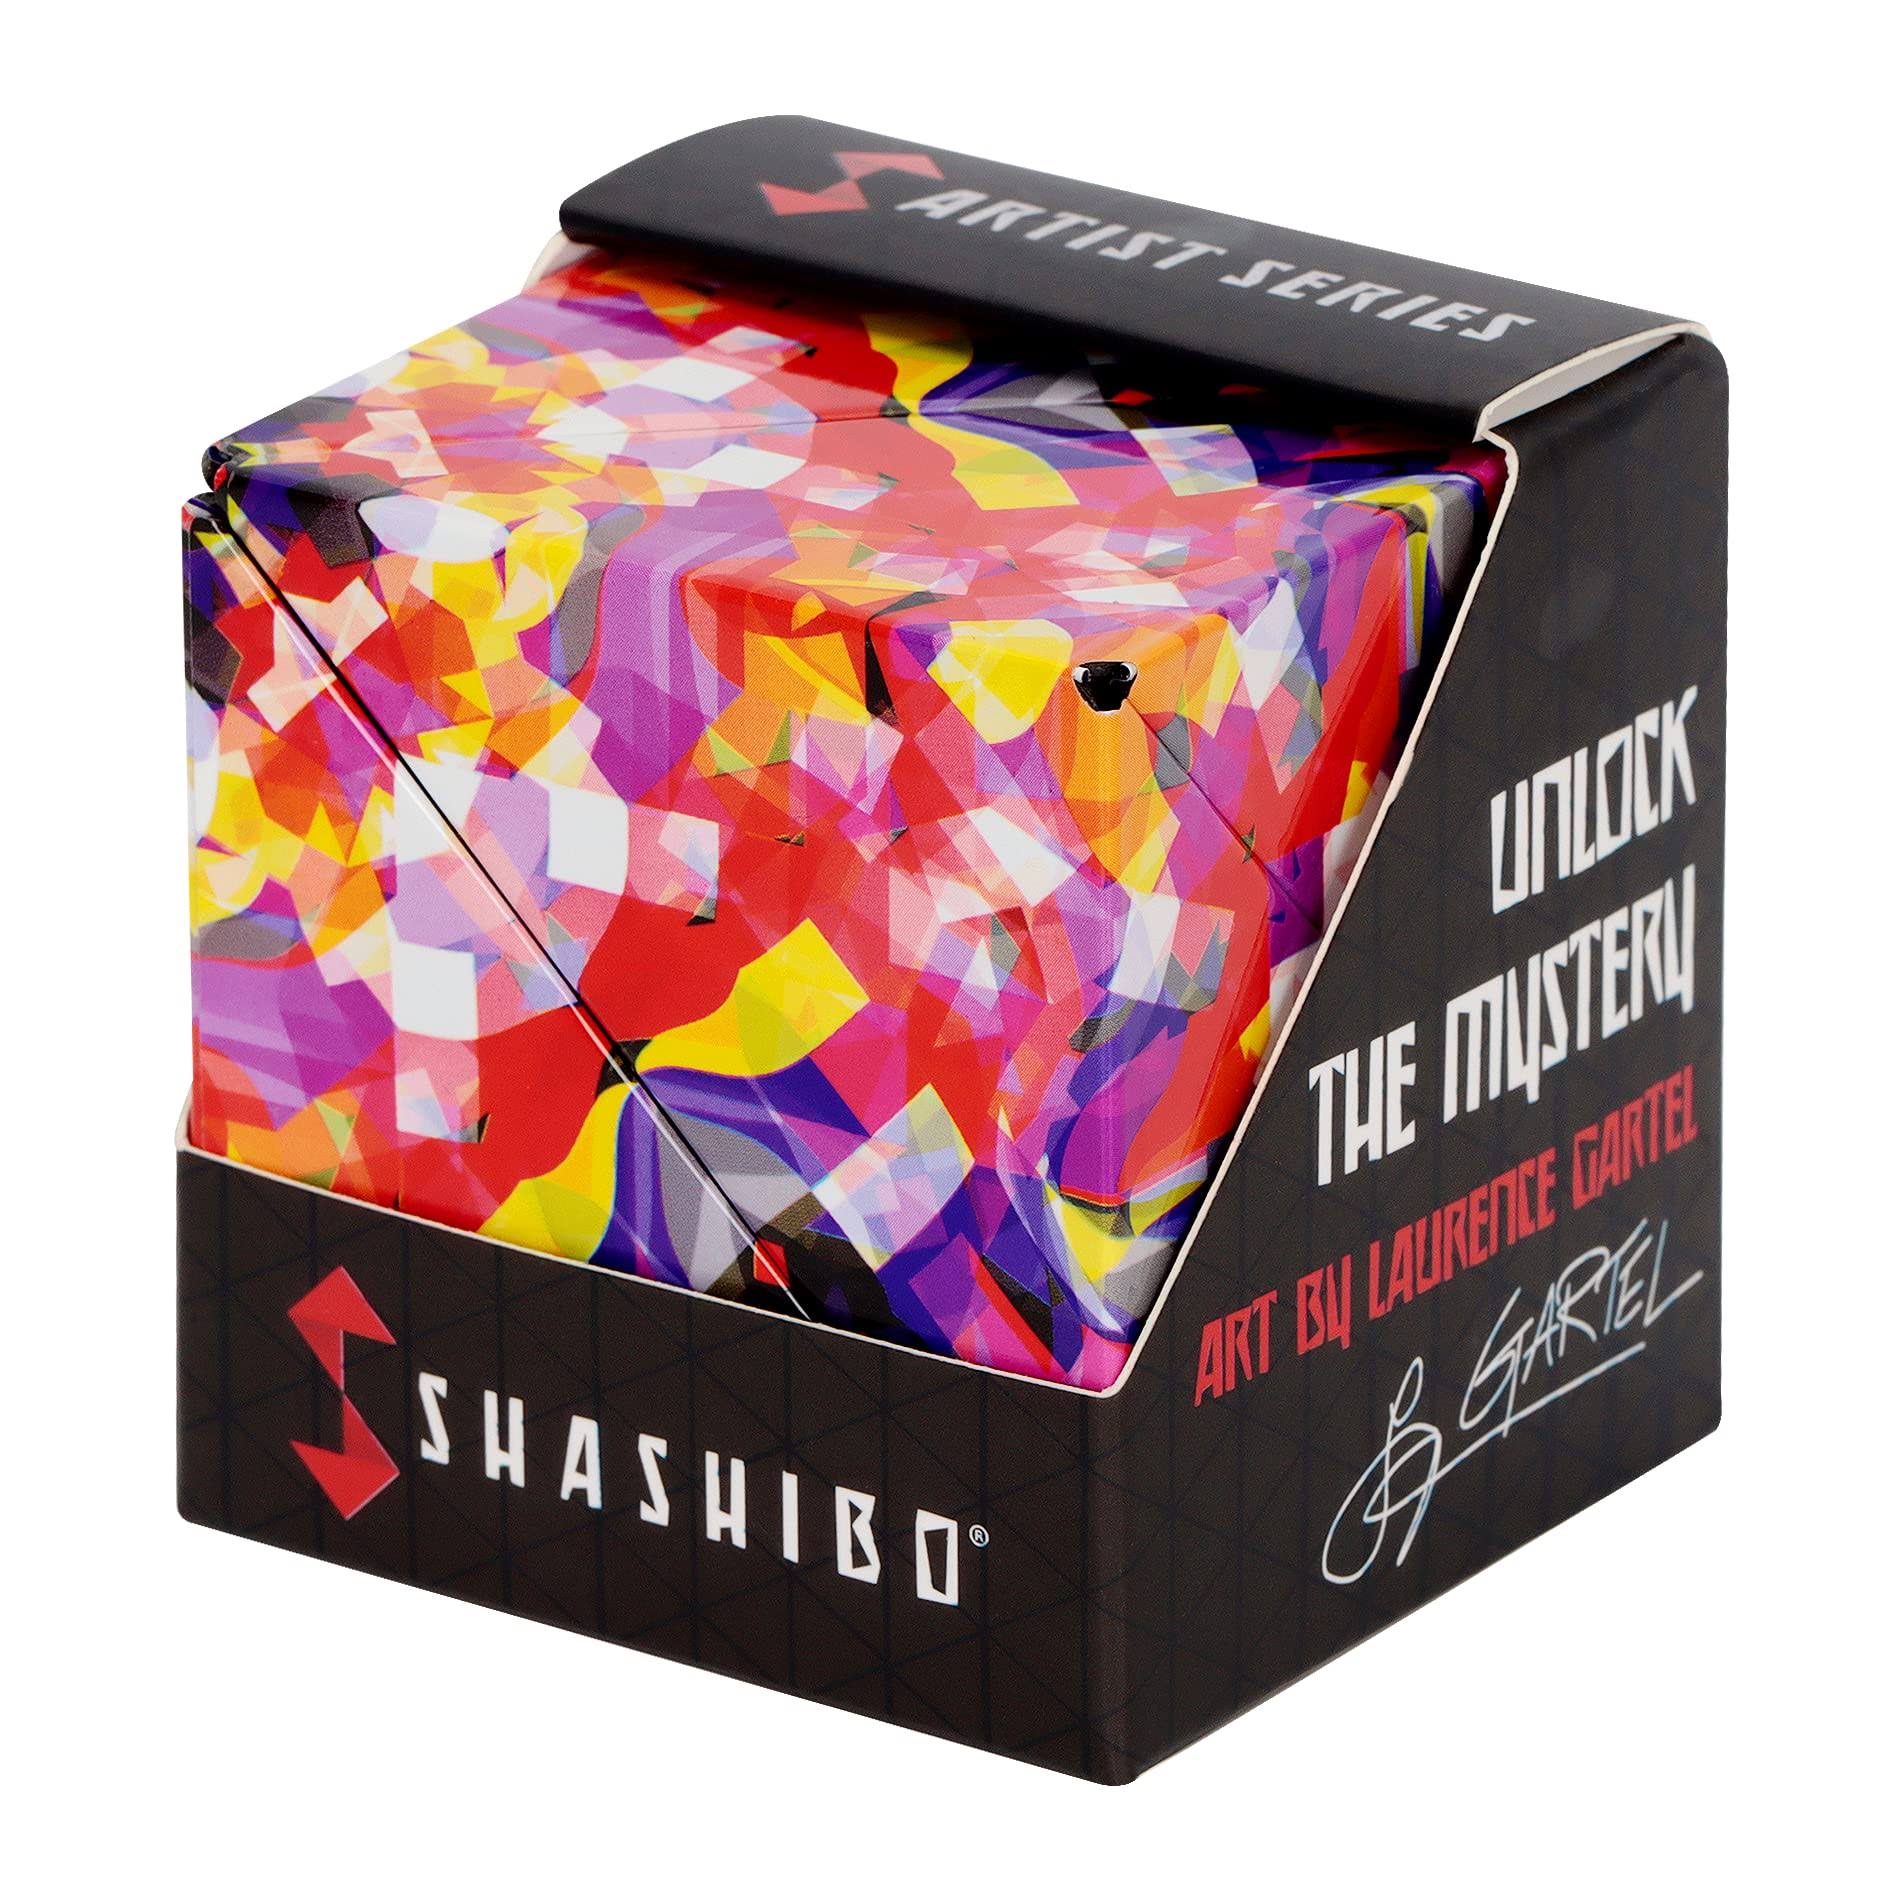 SHASHIBO Shape Shifting Box - Award-Winning, Patented Fidget Cube w/ 36 Magnets - Extraordinary 3D Magic Cube – Fidget Toy Transforms Into Over 70